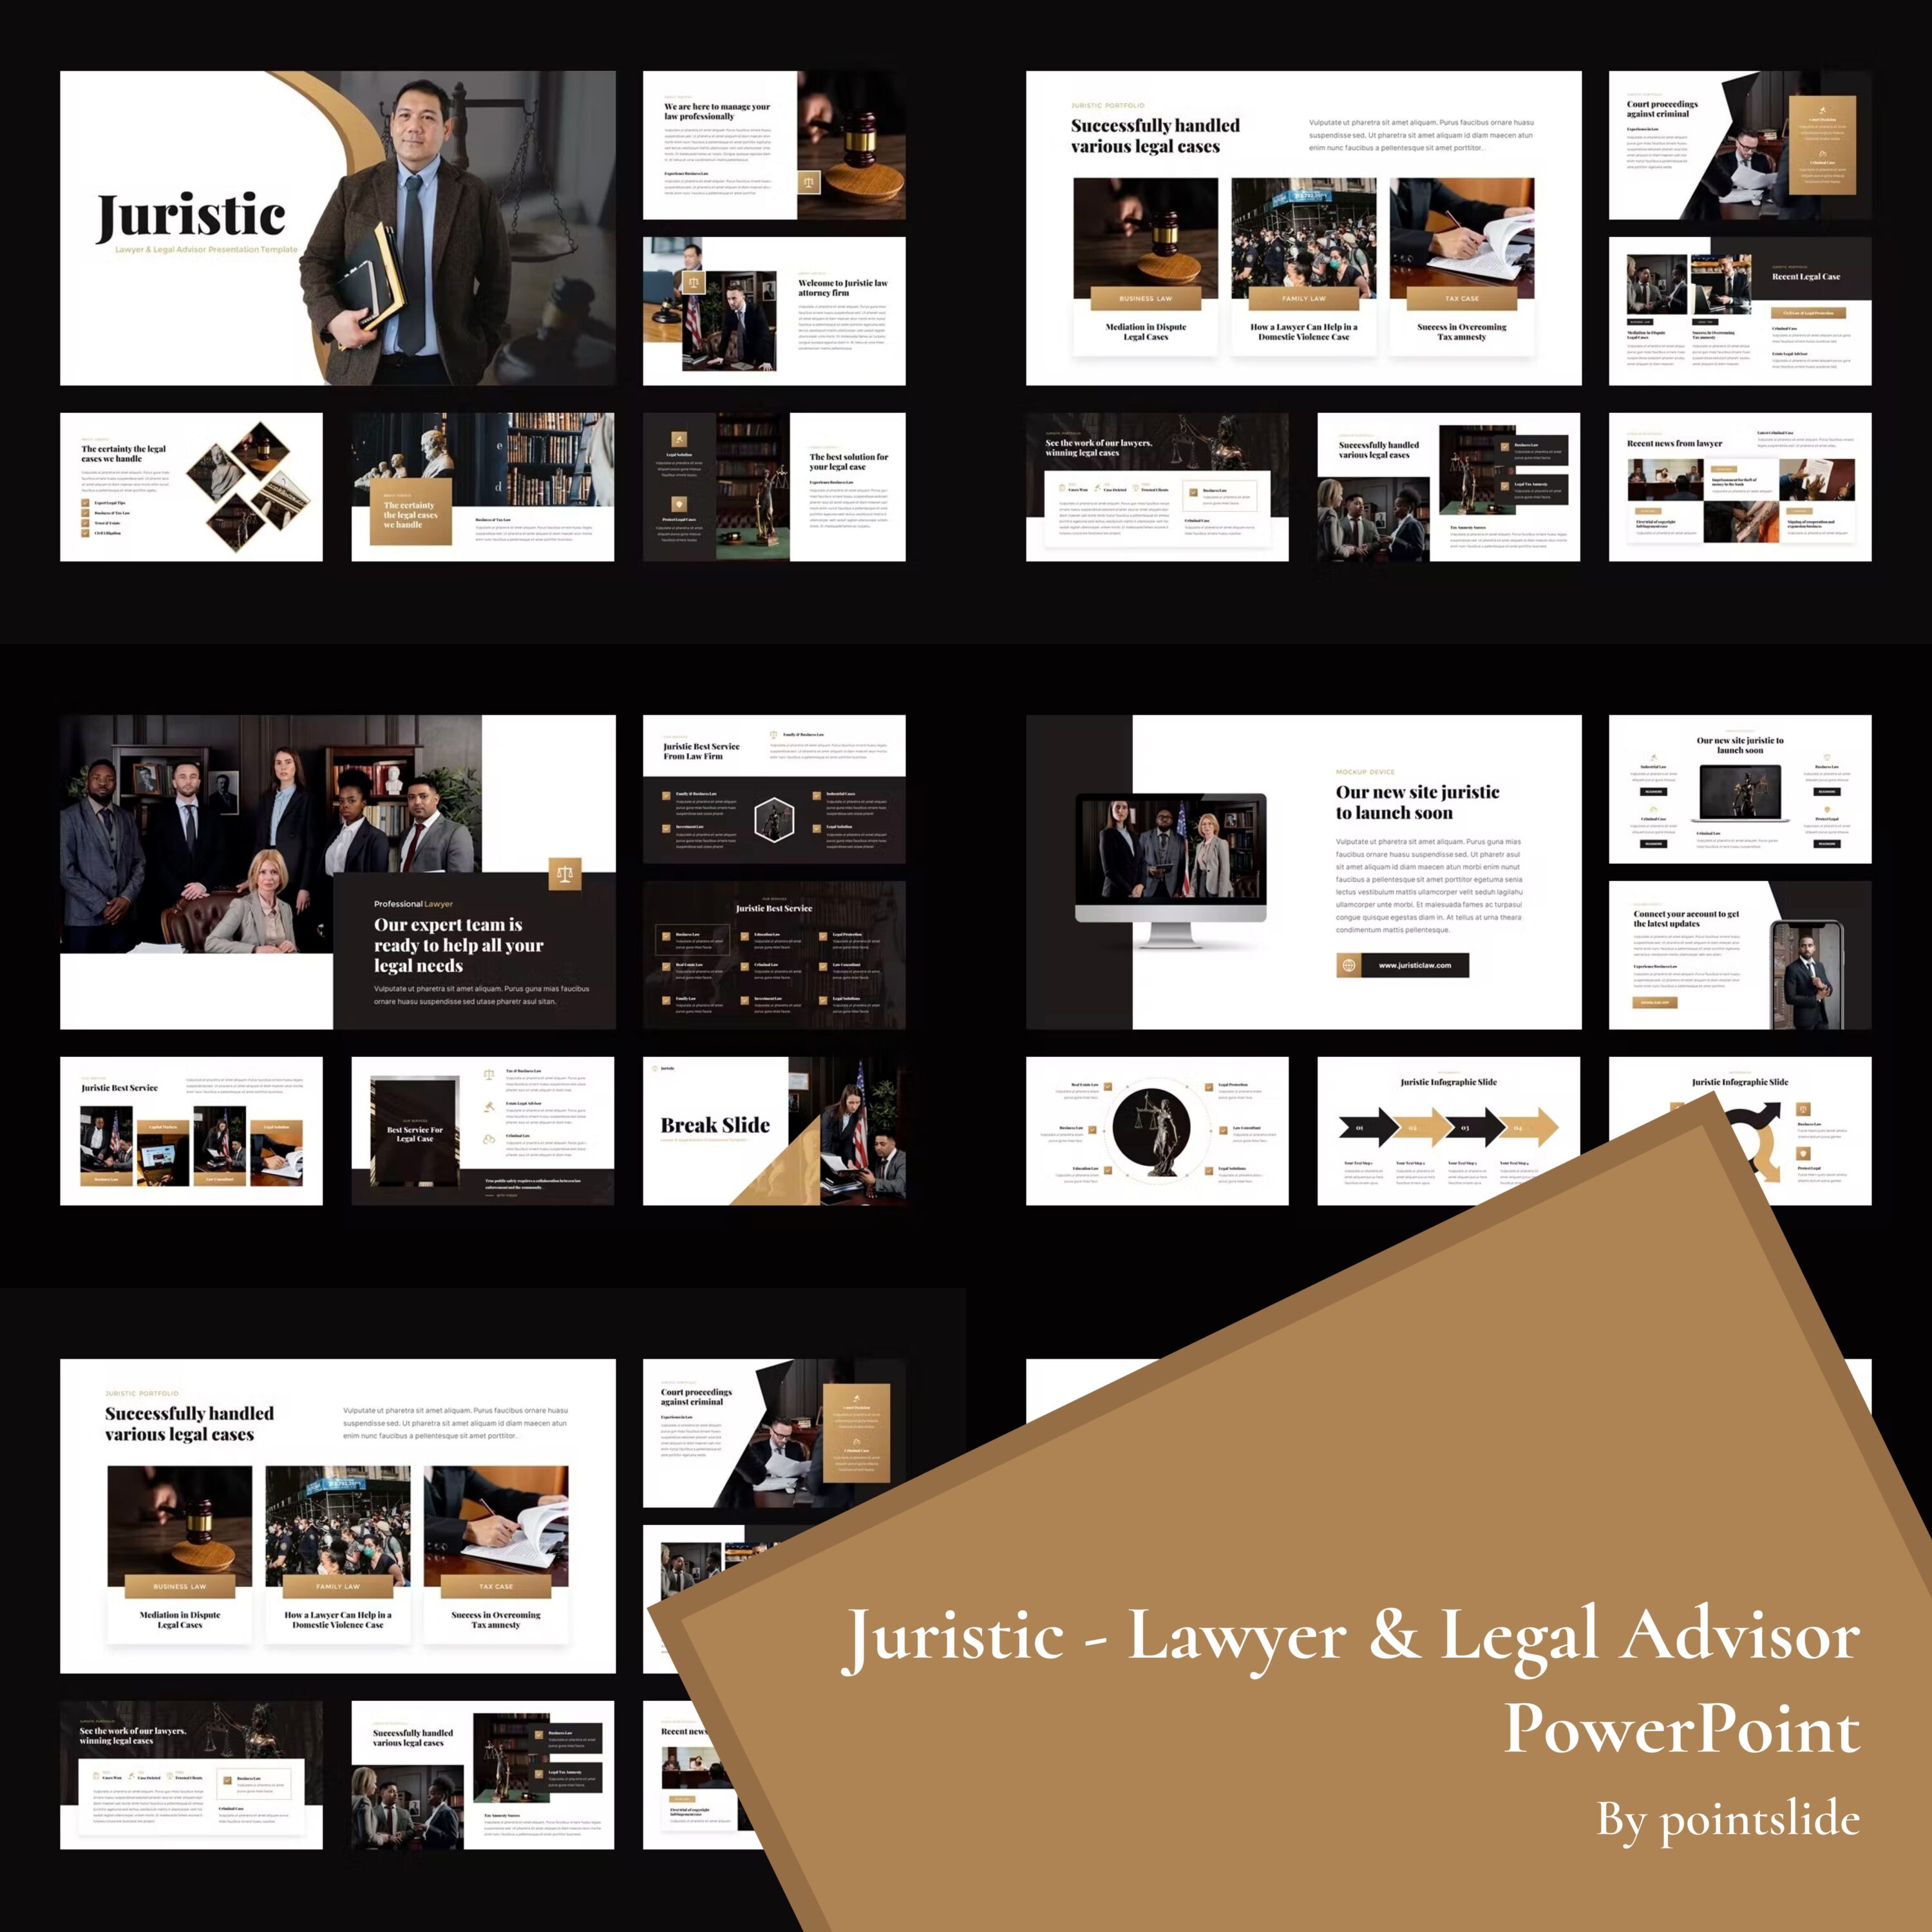 Juristic Lawyer Legal Advisor Powerpoint 1500 2.